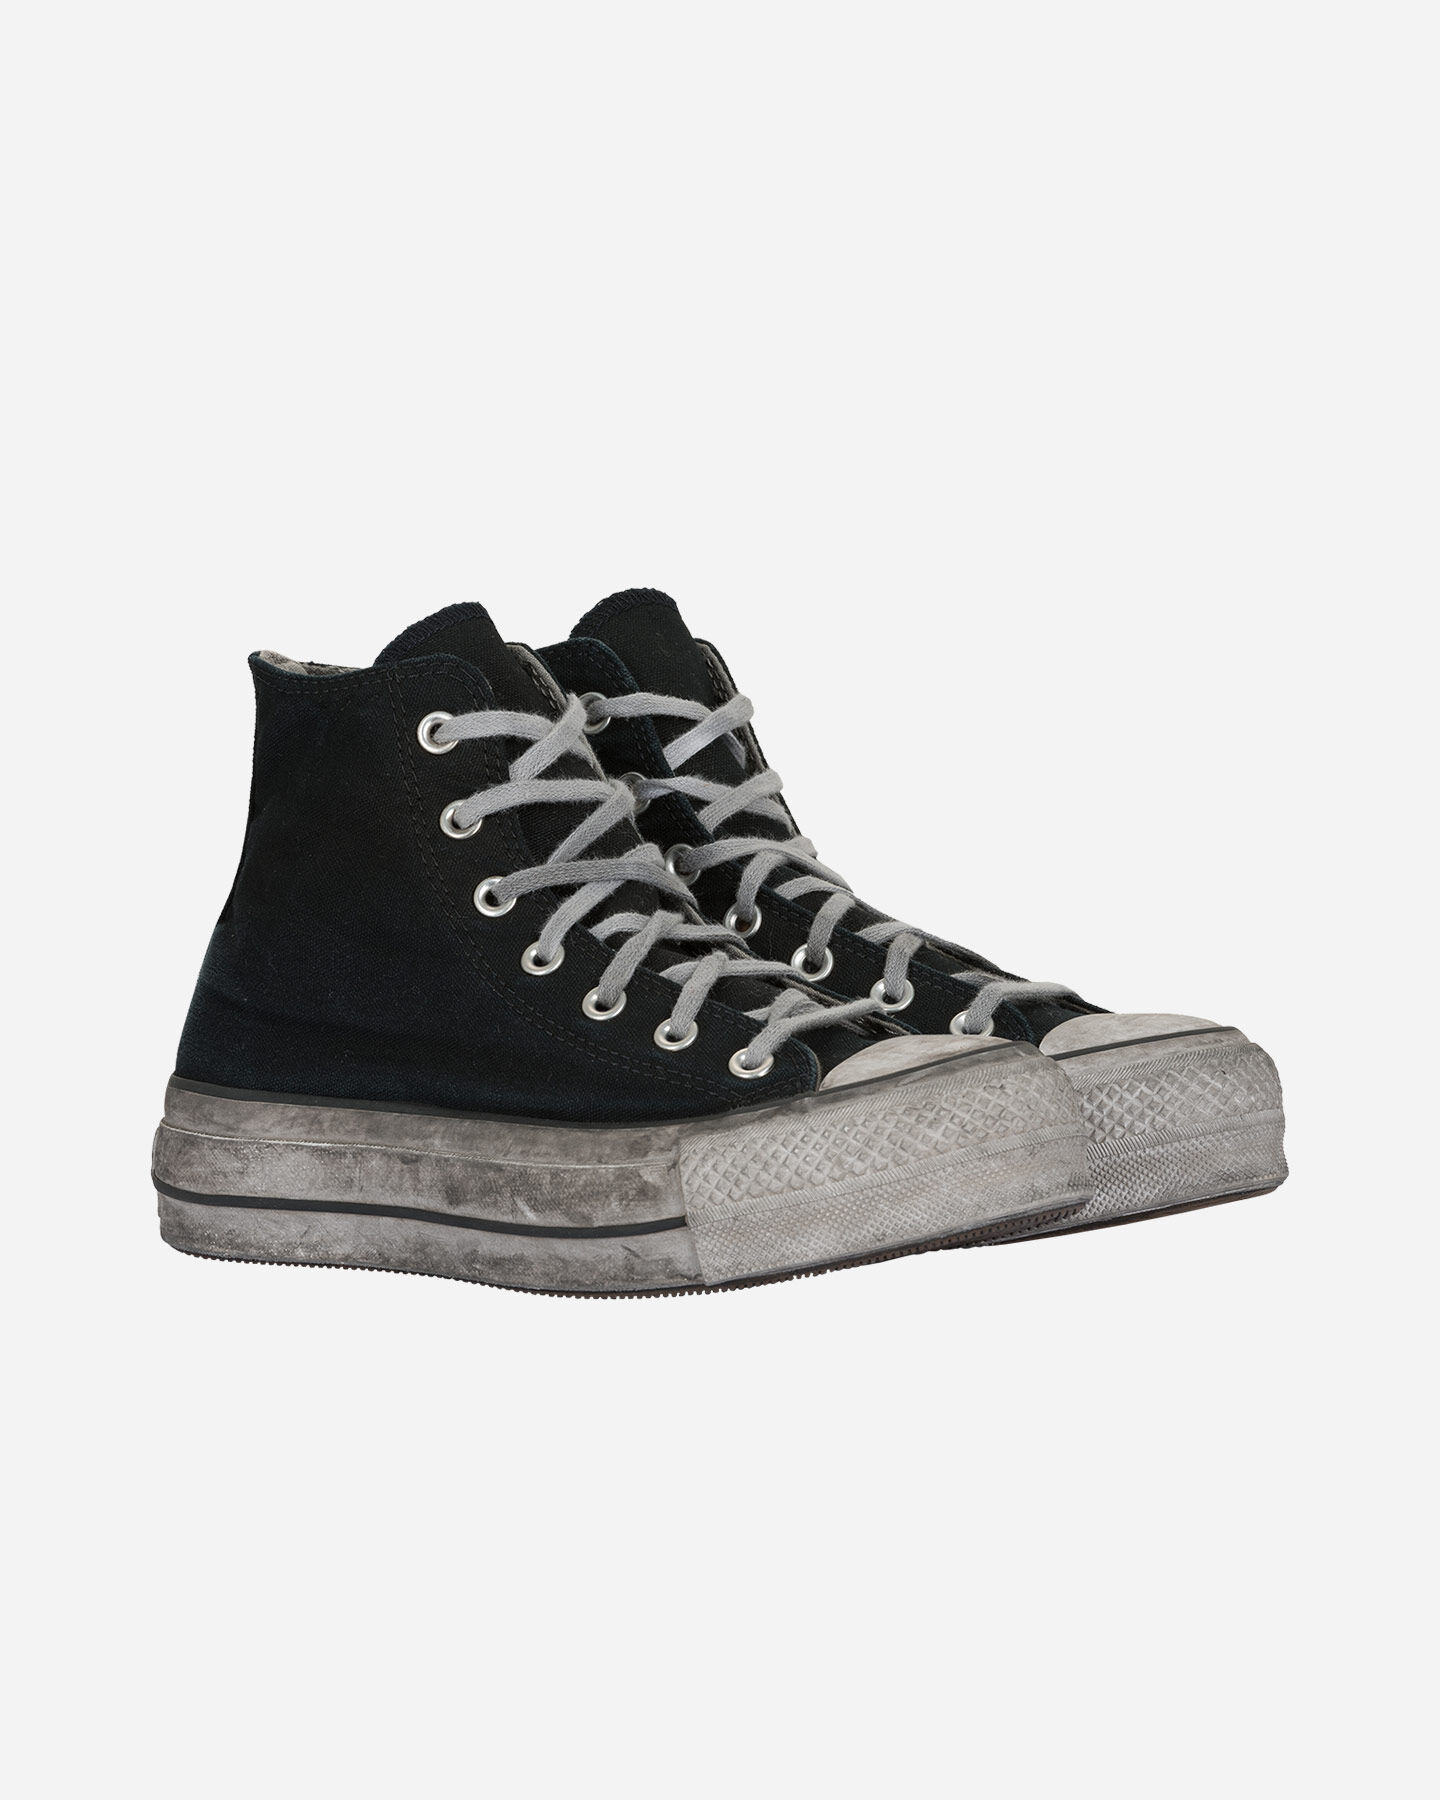  Scarpe sneakers CONVERSE CHUCK TAYLOR ALL STAR HIGH W S5172270|001|5 scatto 1